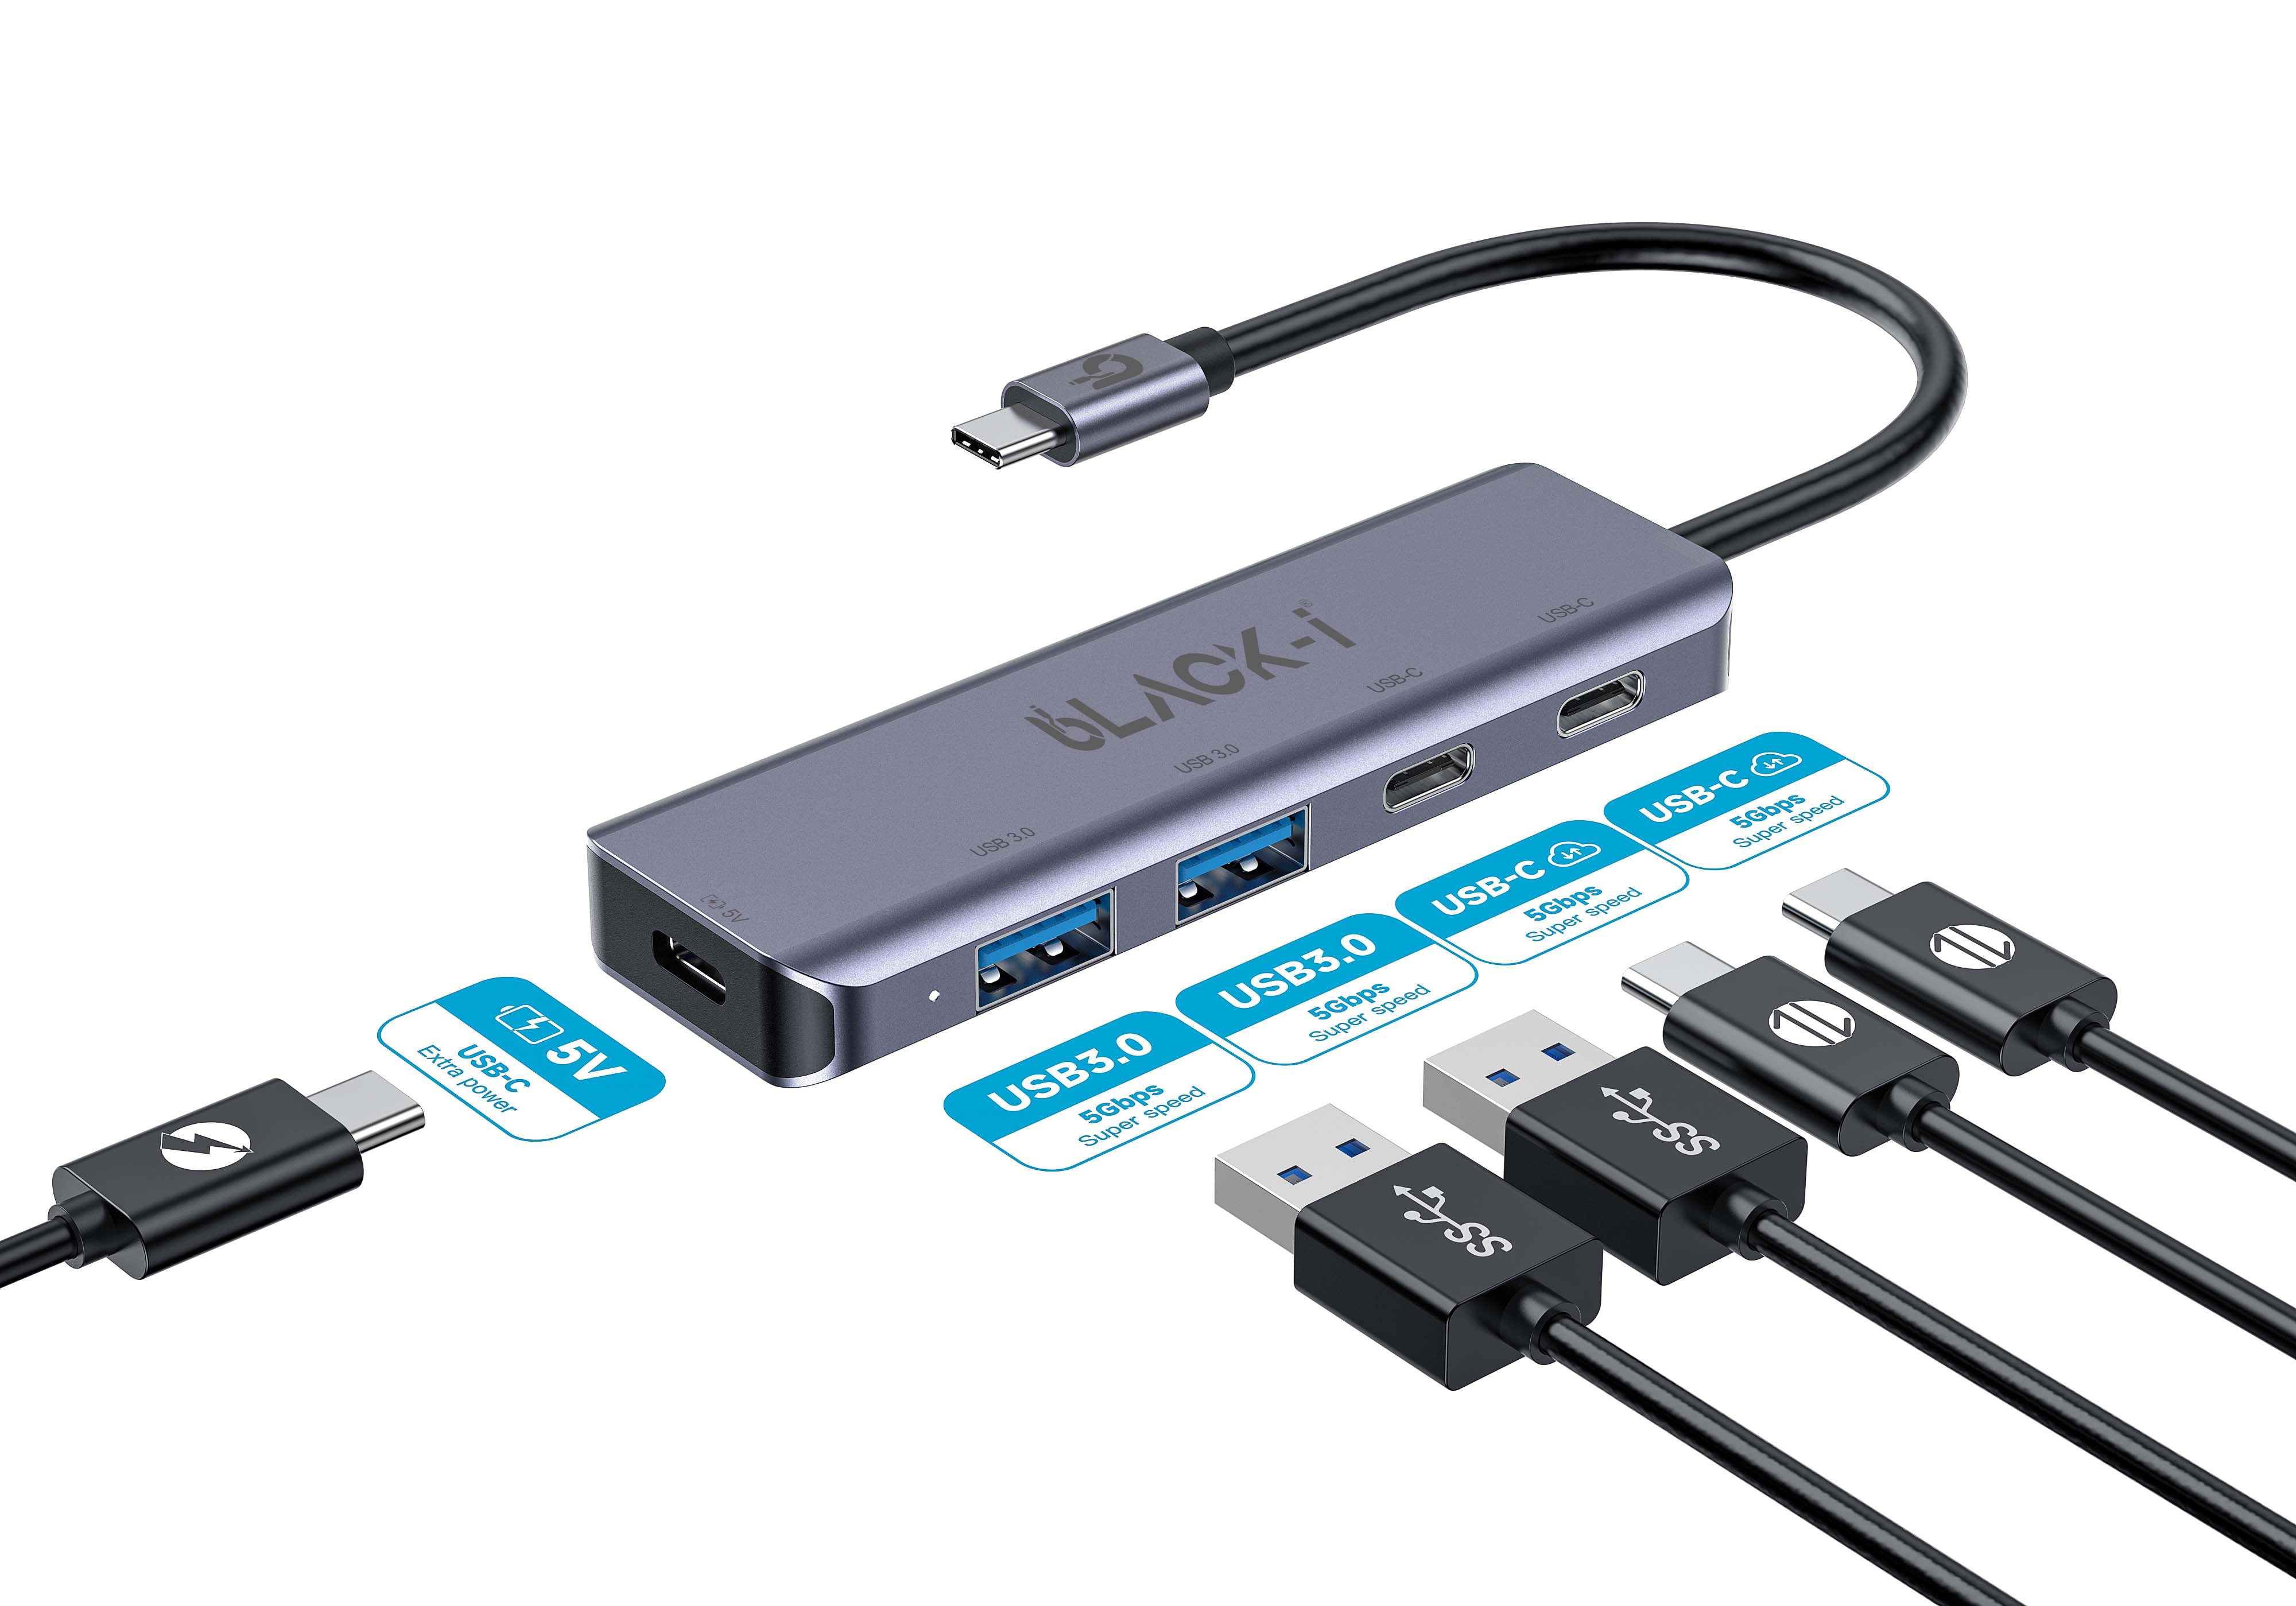 Black-i USB-C to 2*USB-C & 2*USB 3.0 Hub – Enhance Connectivity with Dual USB-C and Dual USB 3.0 Ports for Efficient Data Transfer